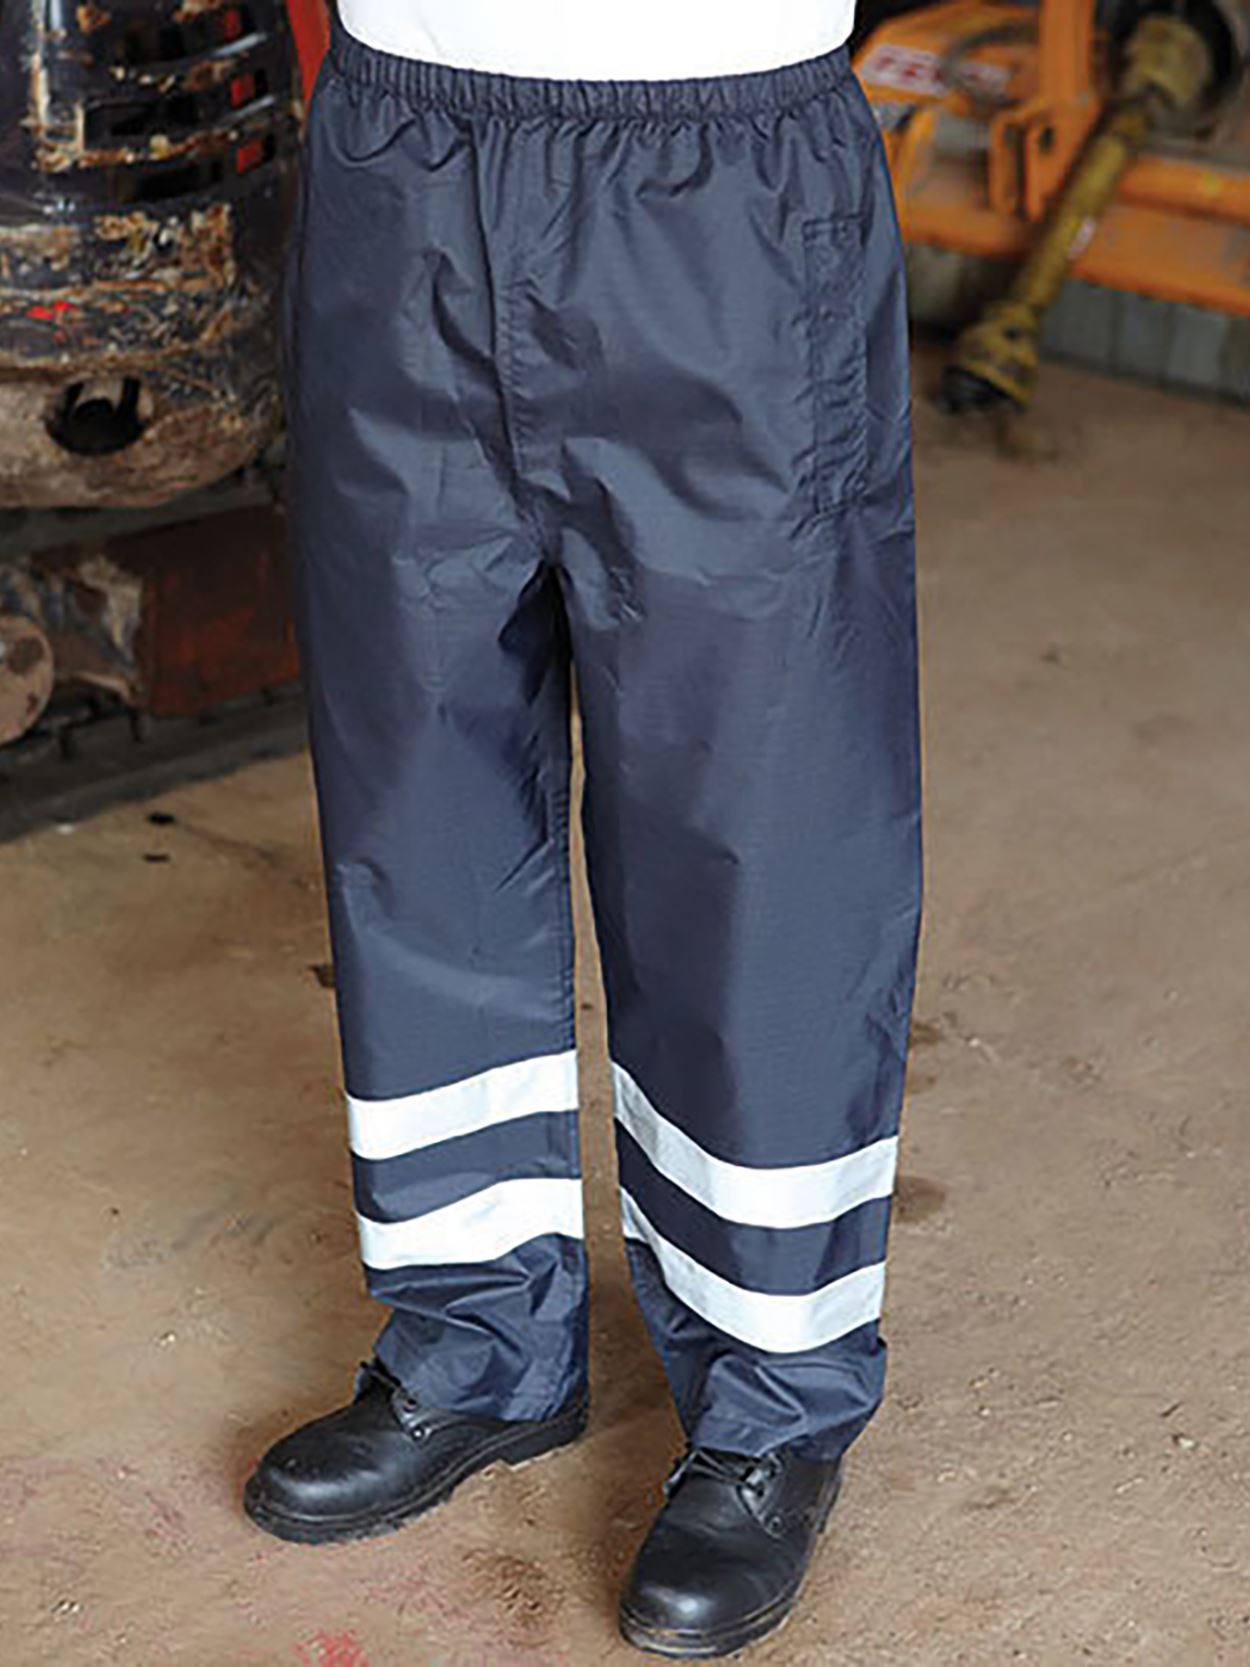 HVS461 YK070 Hi Vis Waterproof Contractor Trousers Image 1